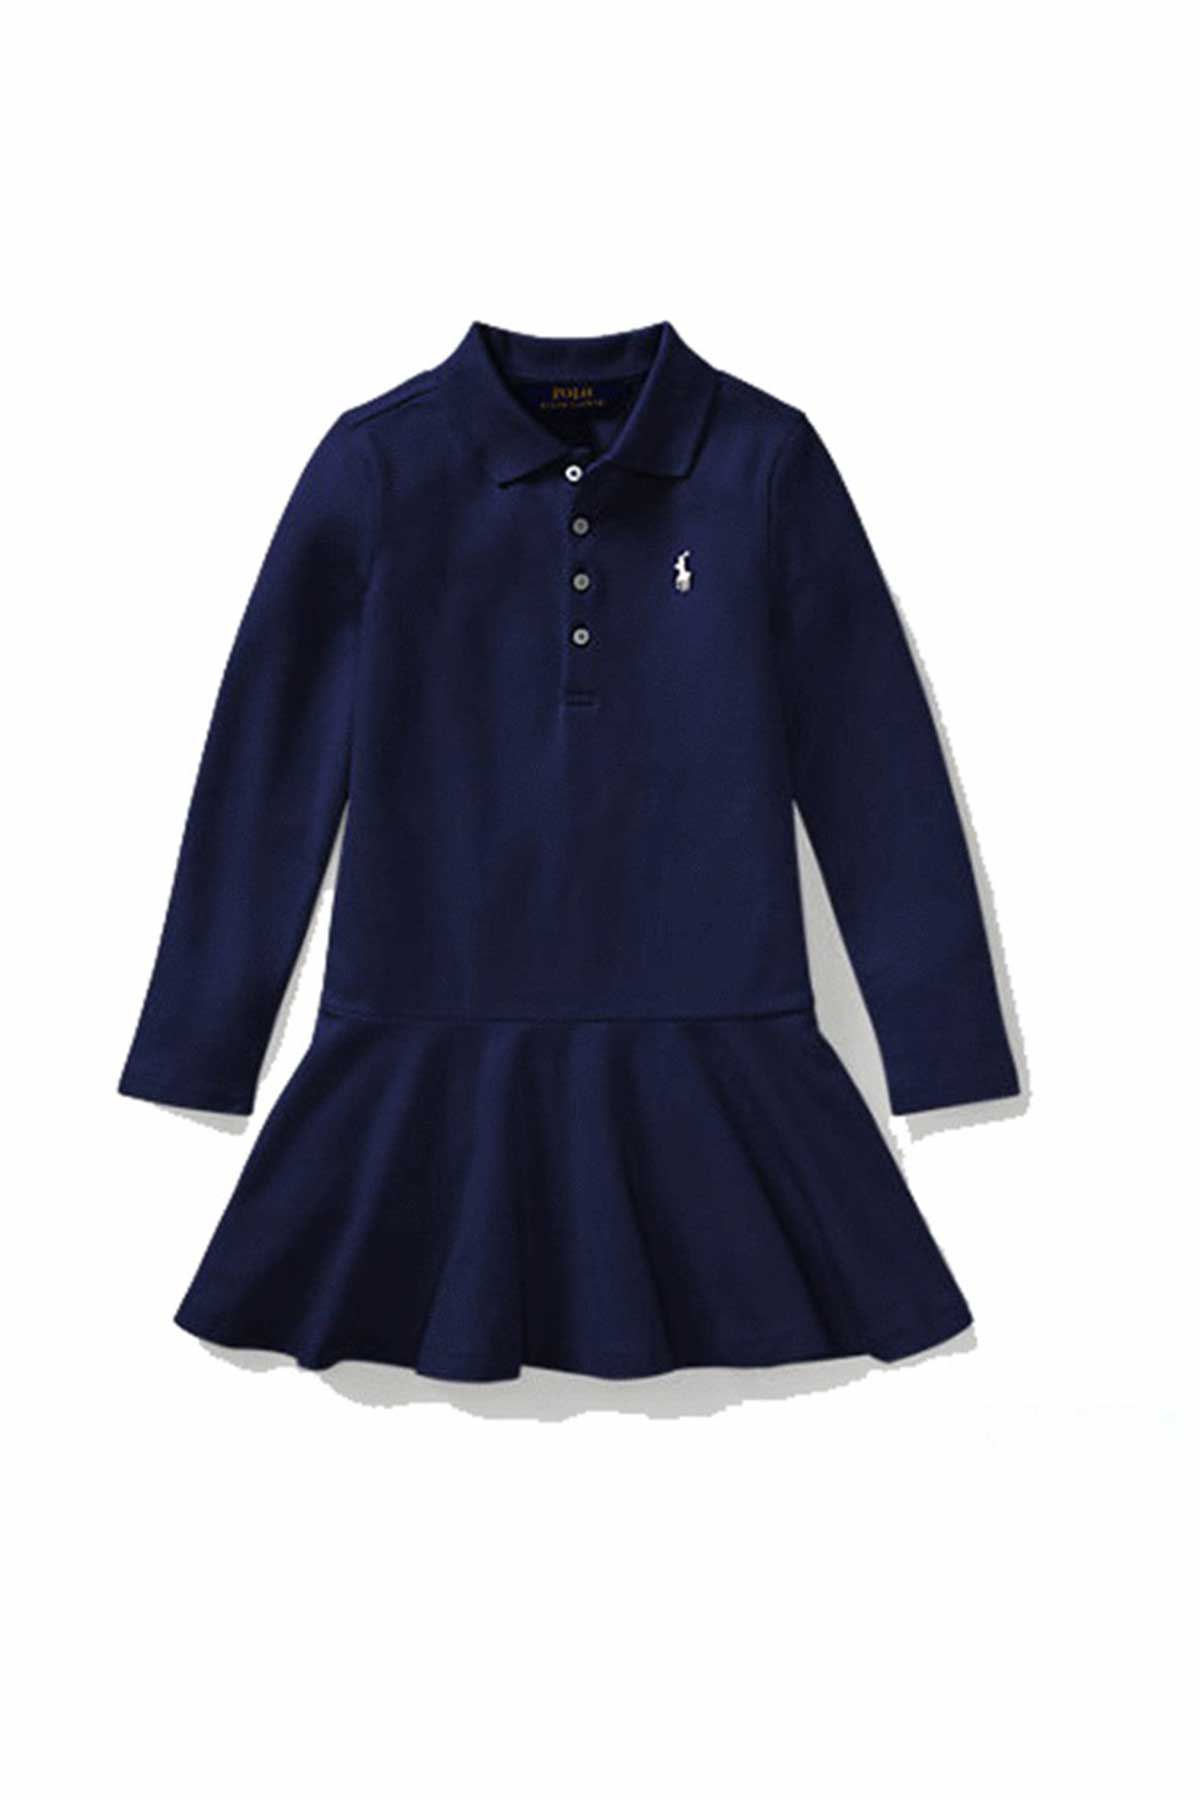 Polo Ralph Lauren 4 Yaş Kız Çocuk Elbise-Libas Trendy Fashion Store